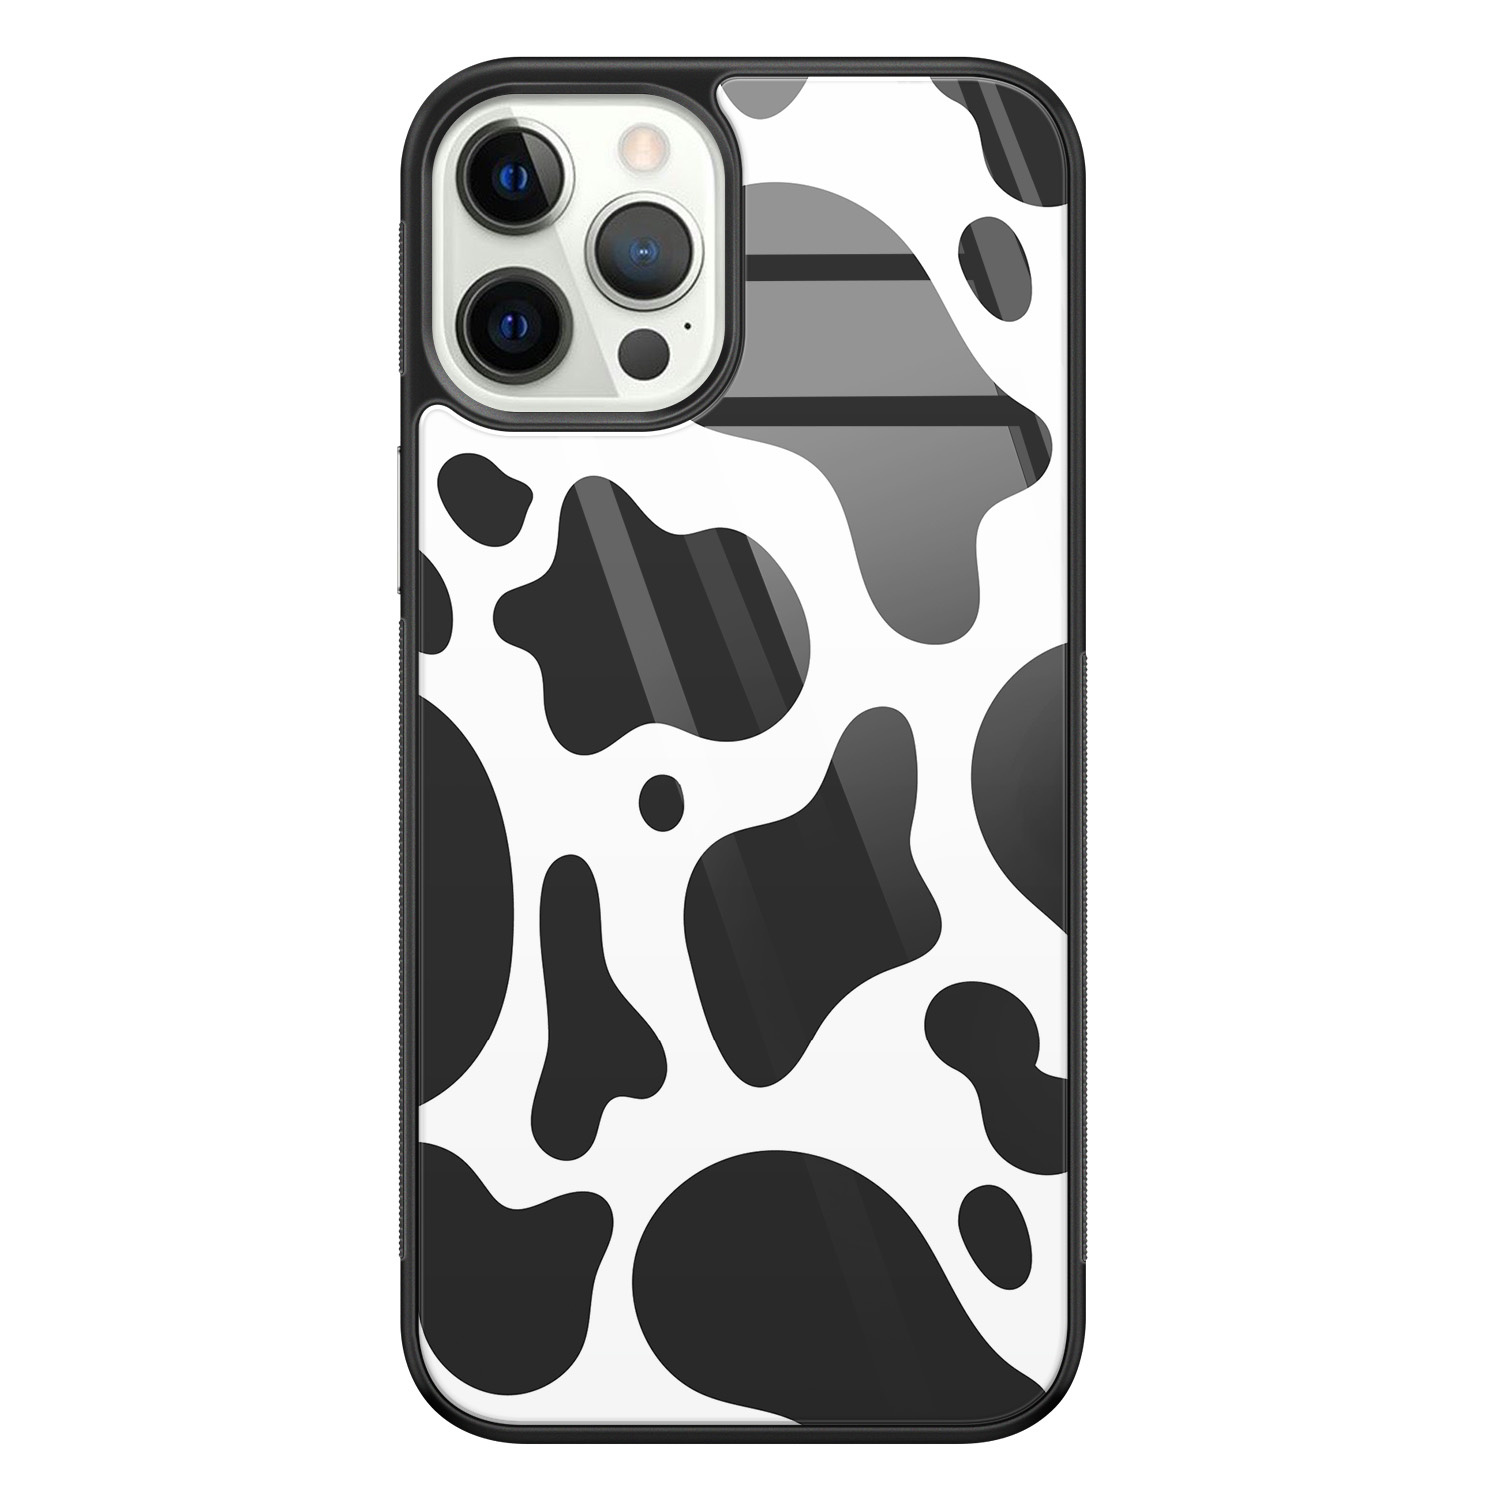 Leuke Telefoonhoesjes iPhone 12 Pro glazen hardcase - Koeienprint zwart wit